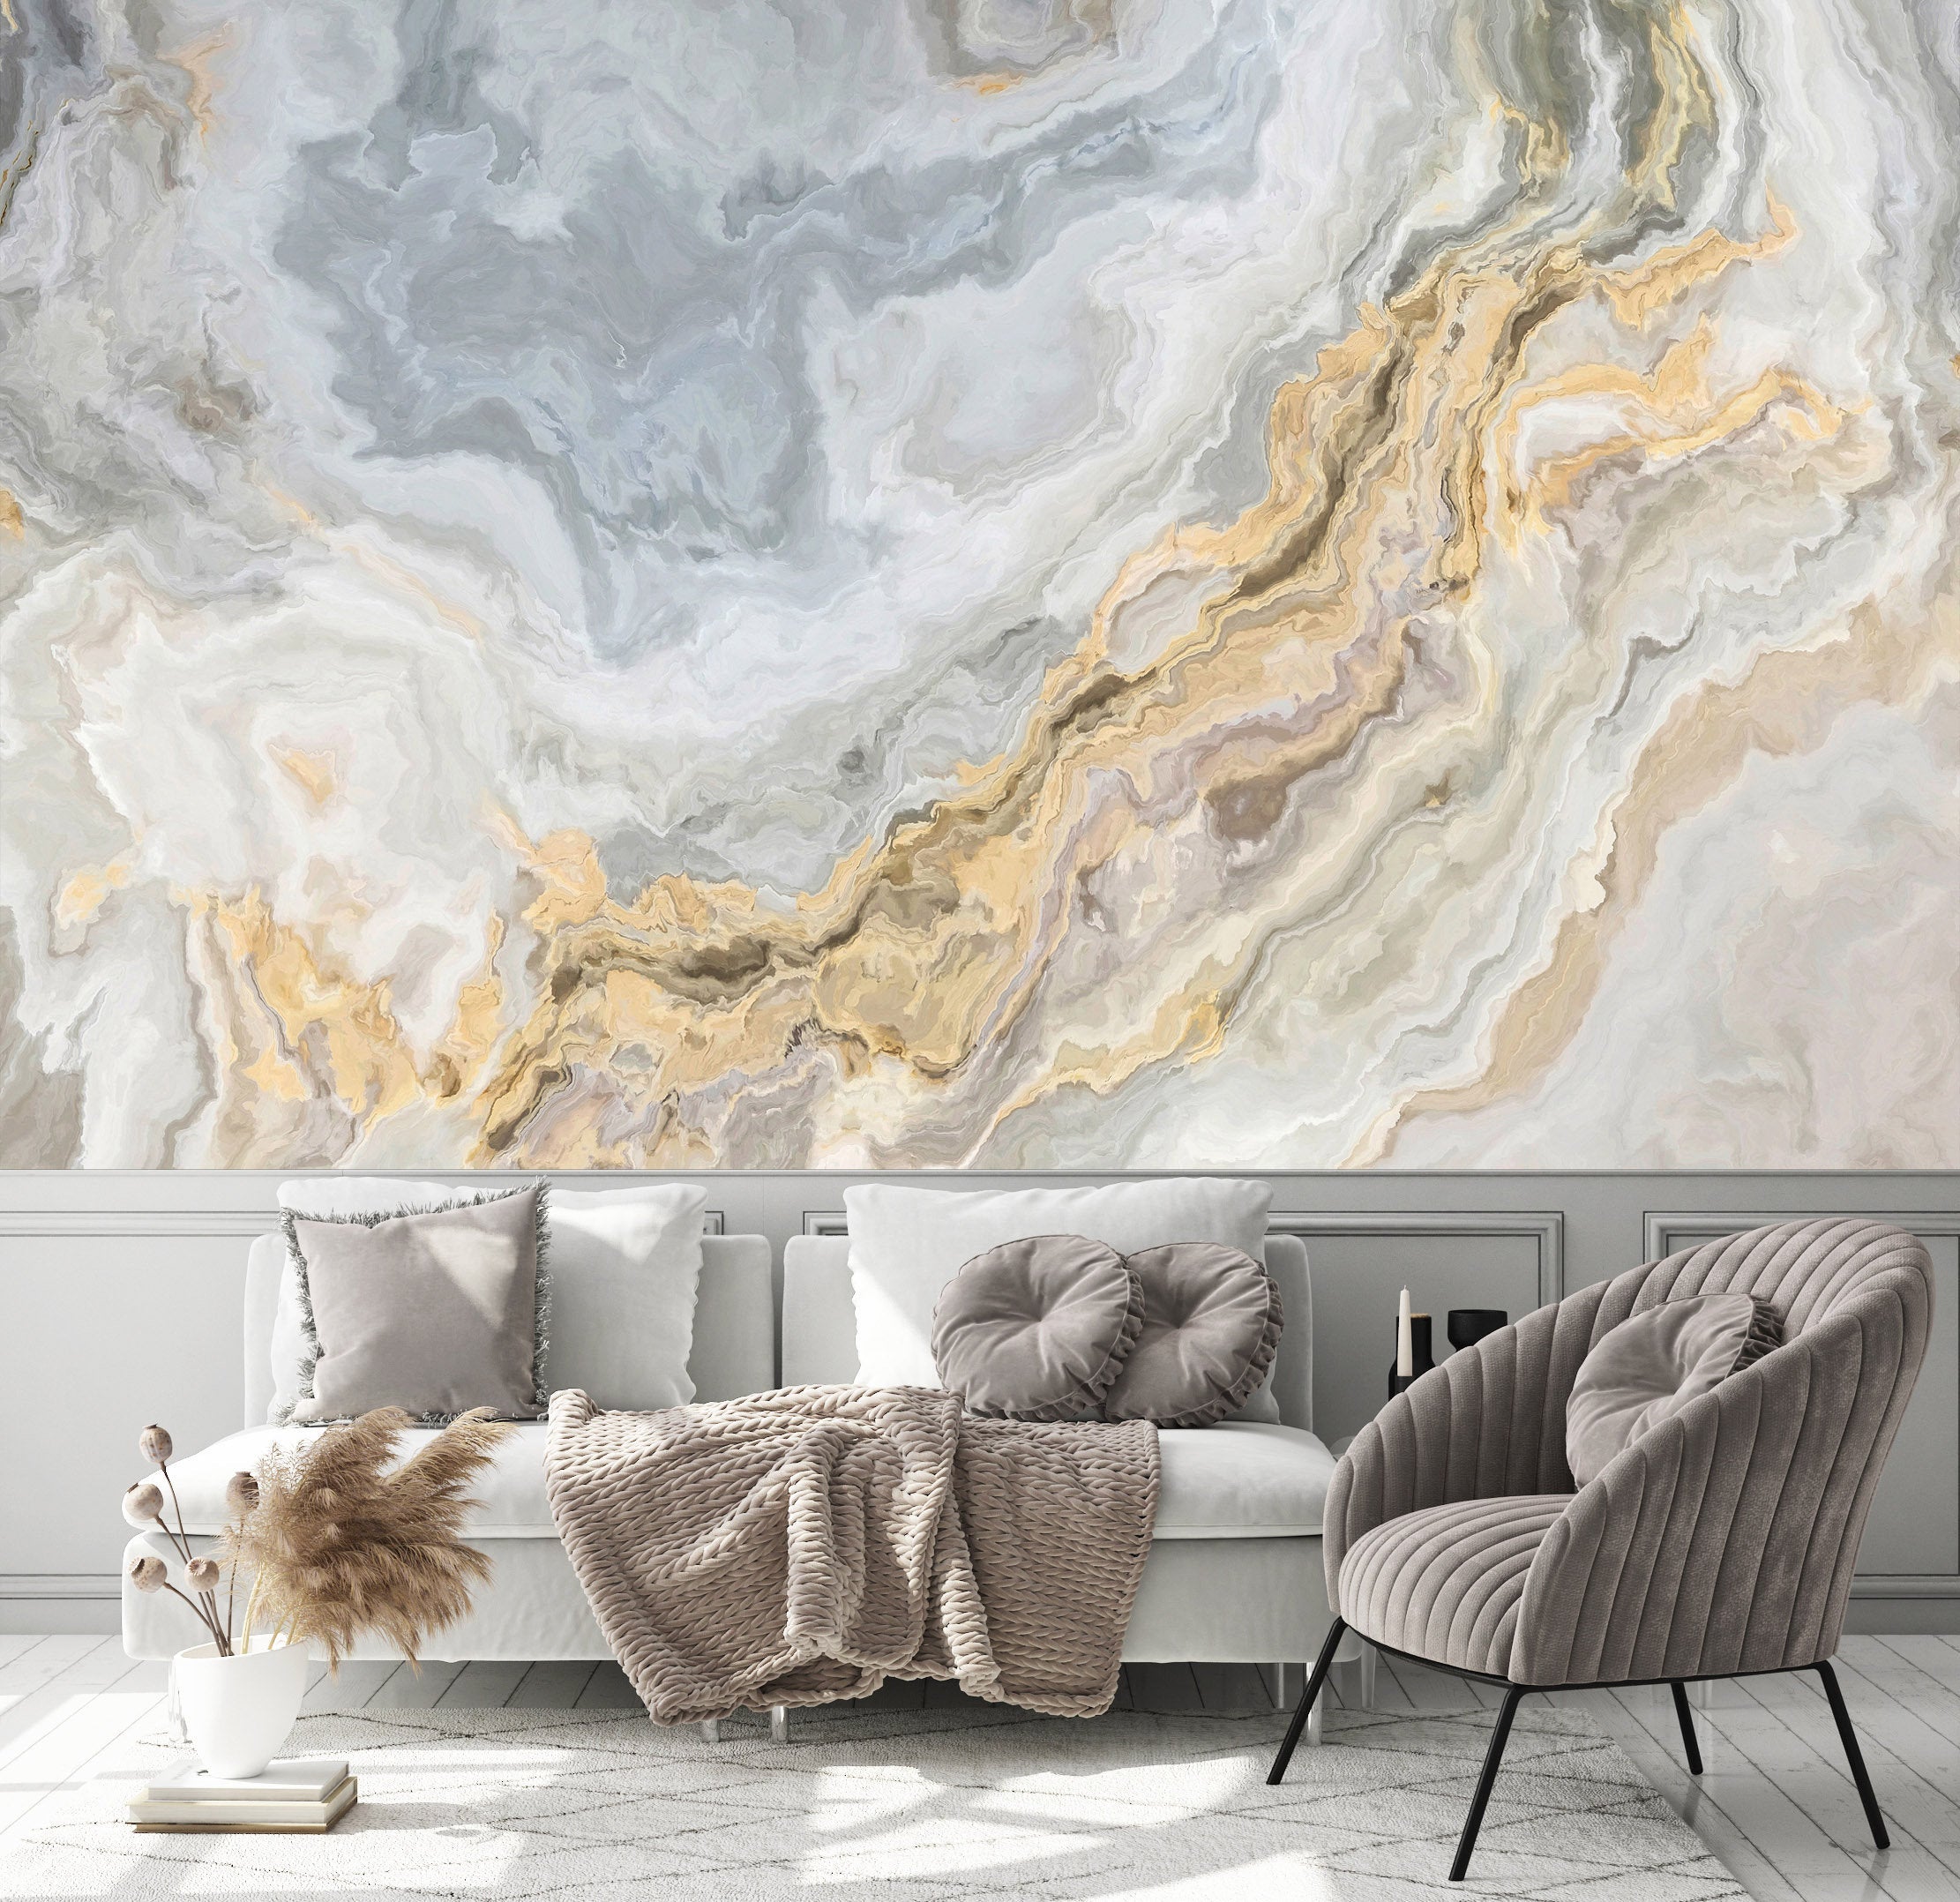 Golden Marble Tile Standing On White Abstract Wallpaper Bathroom Restaurant Bedroom Living Room Cafe Office Mural Home Decor Wall Art